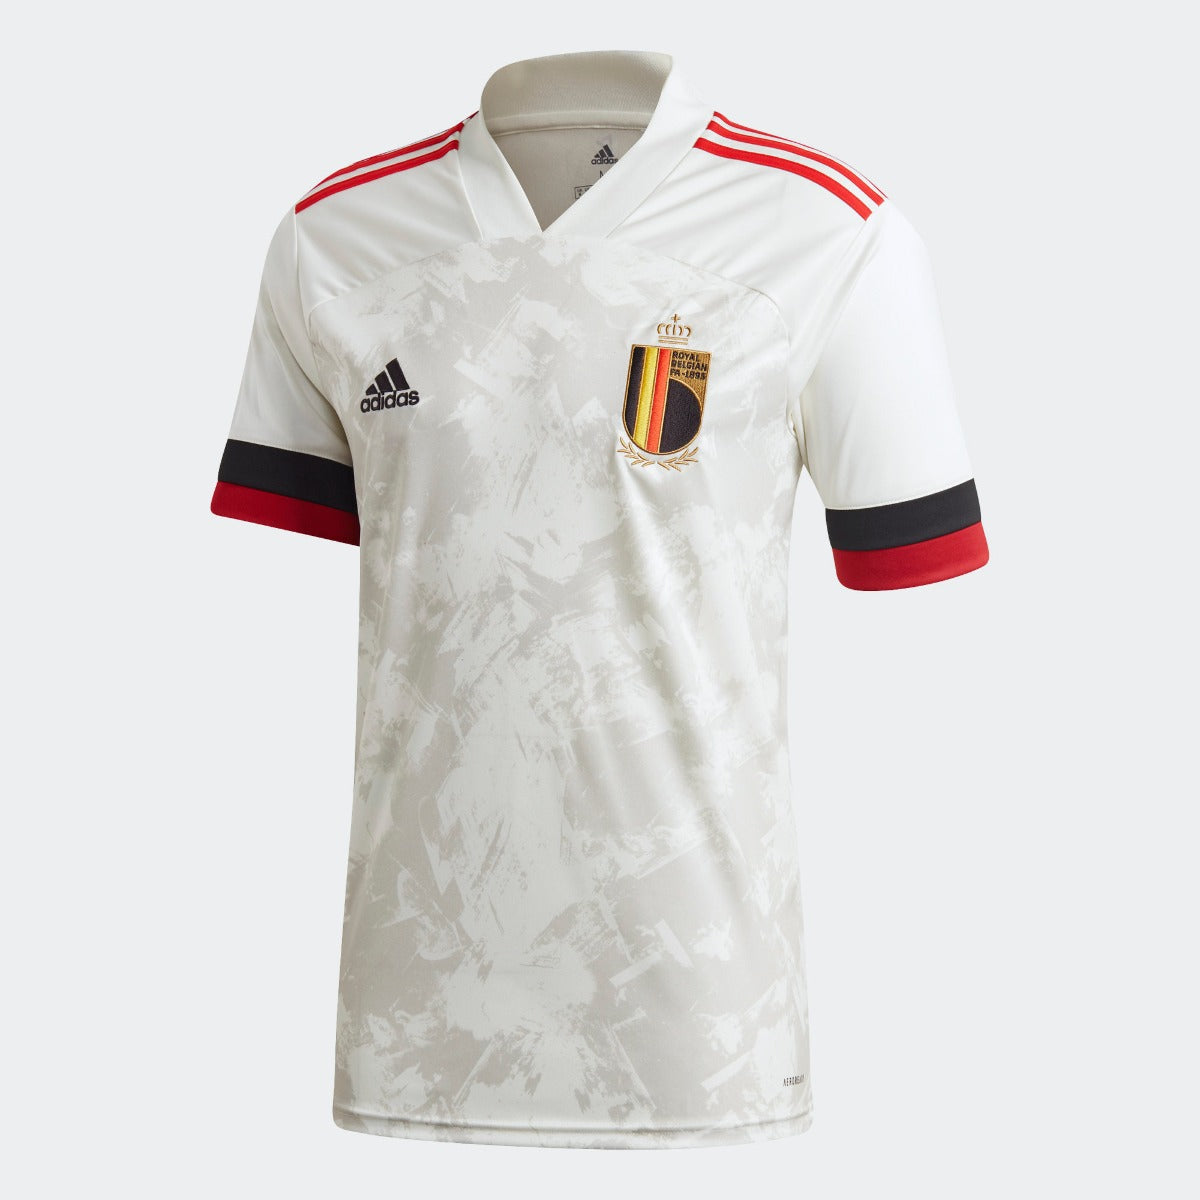 Adidas, Maglia adidas 2020-21 Belgio - Bianco-Rosso